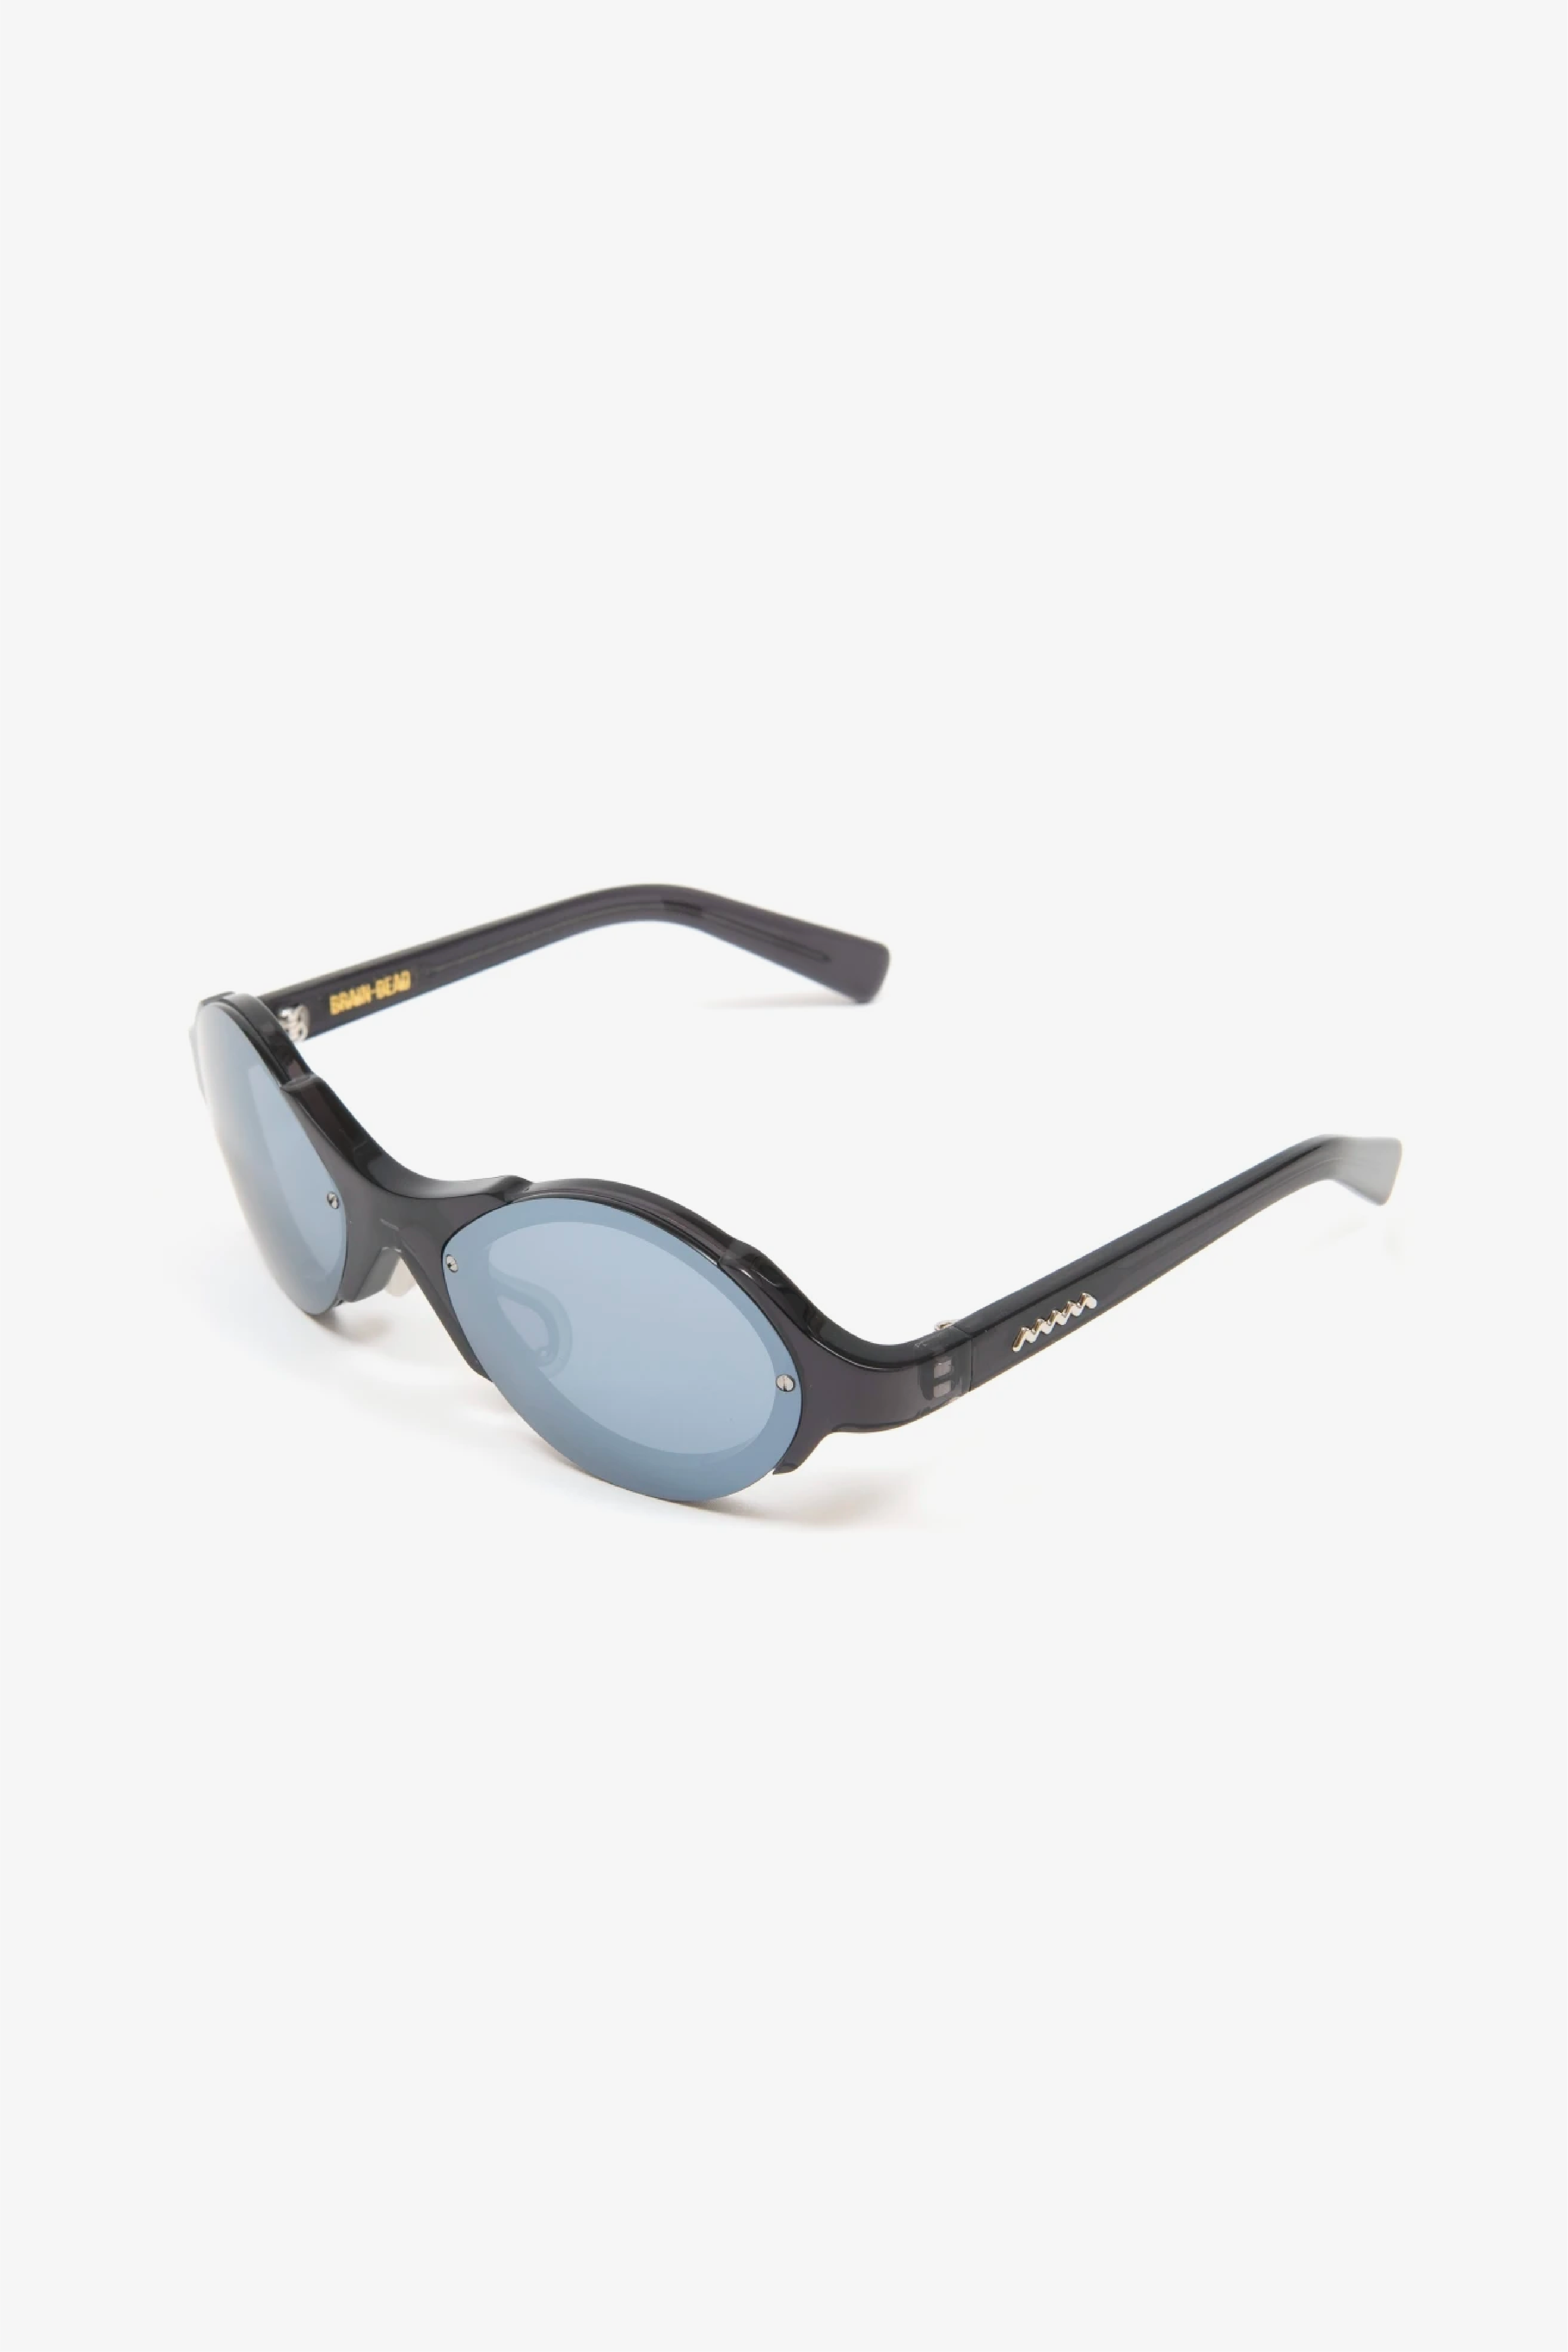 Selectshop FRAME - BRAIN DEAD Black Mutant Sunglasses All-Accessories Dubai